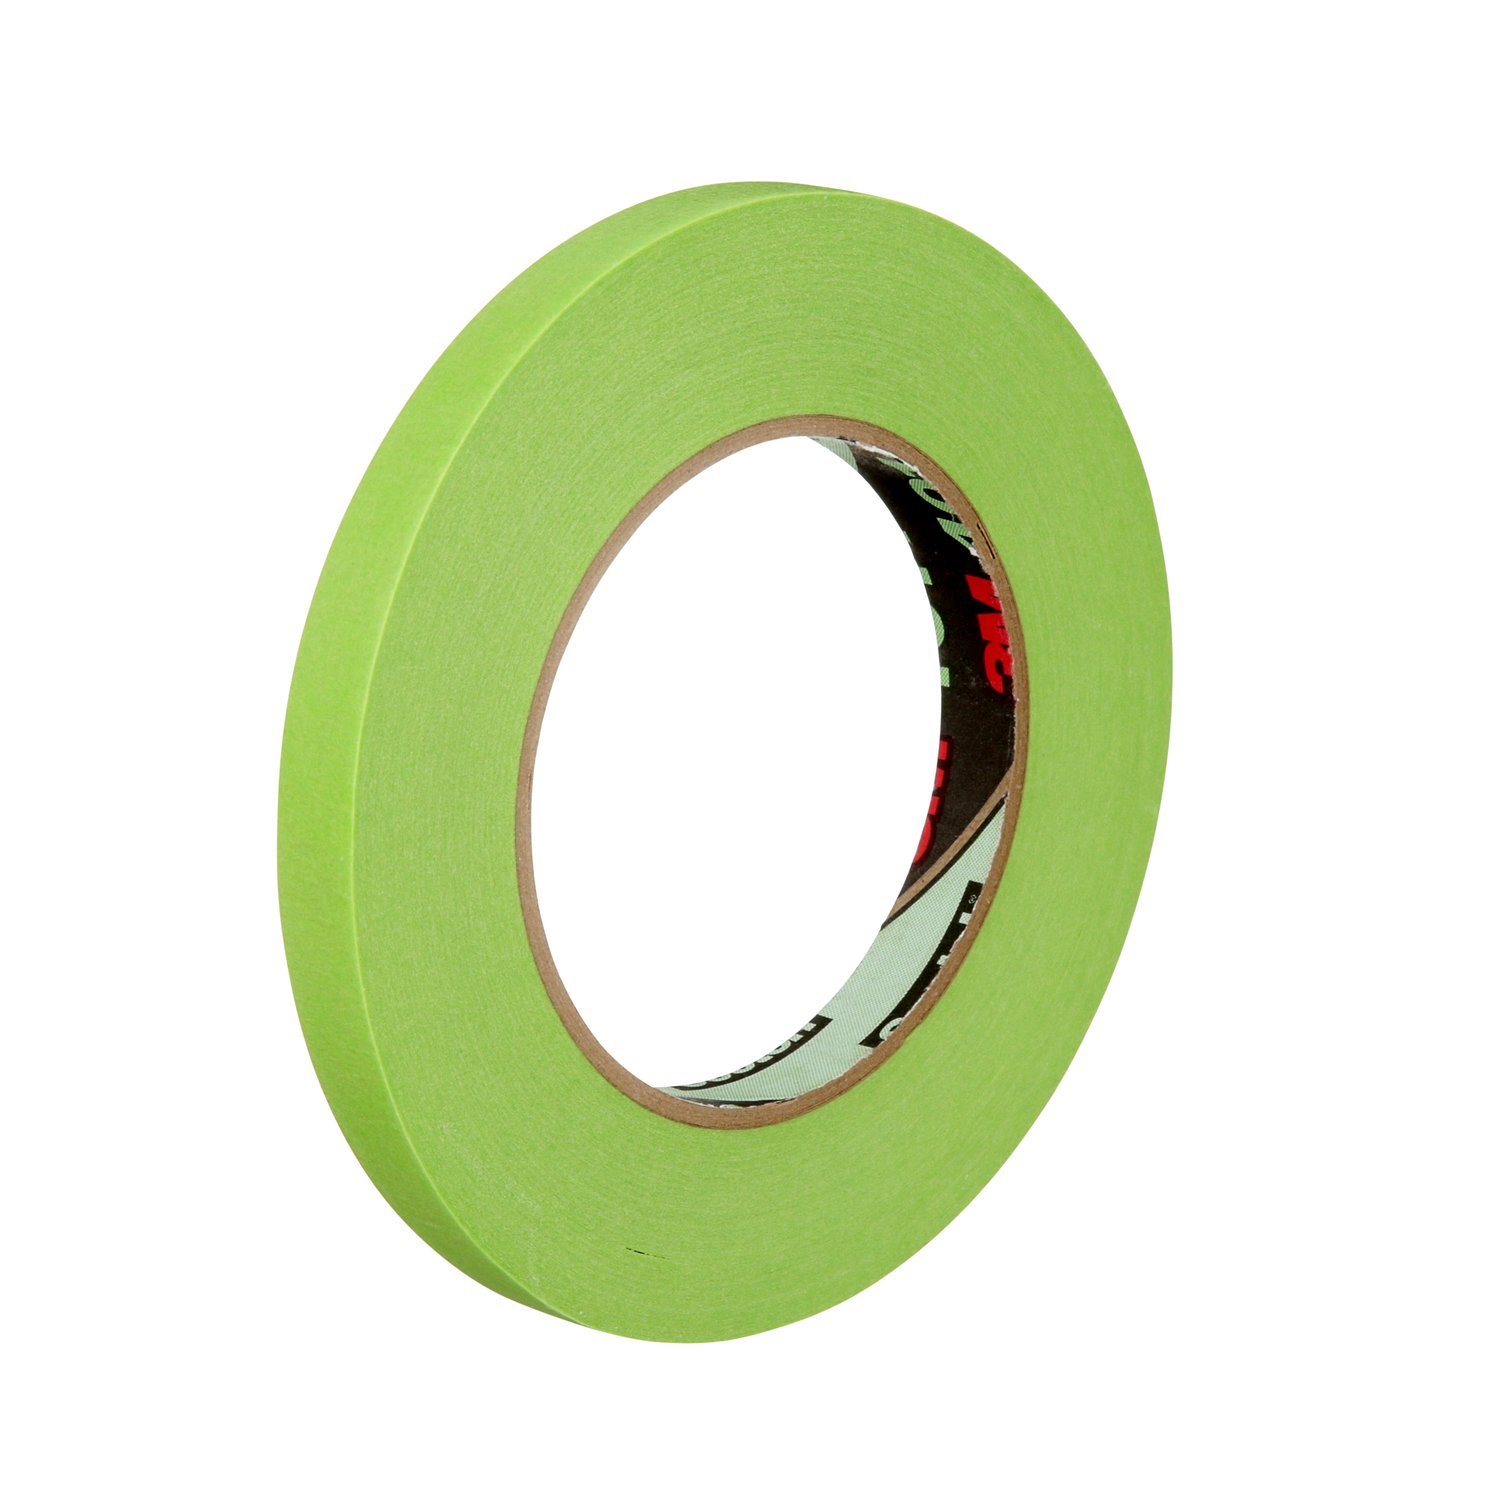 7000124894 - 3M High Performance Green Masking Tape 401+, 12 mm x 55 m 6.7 mil, 48
Roll/Case